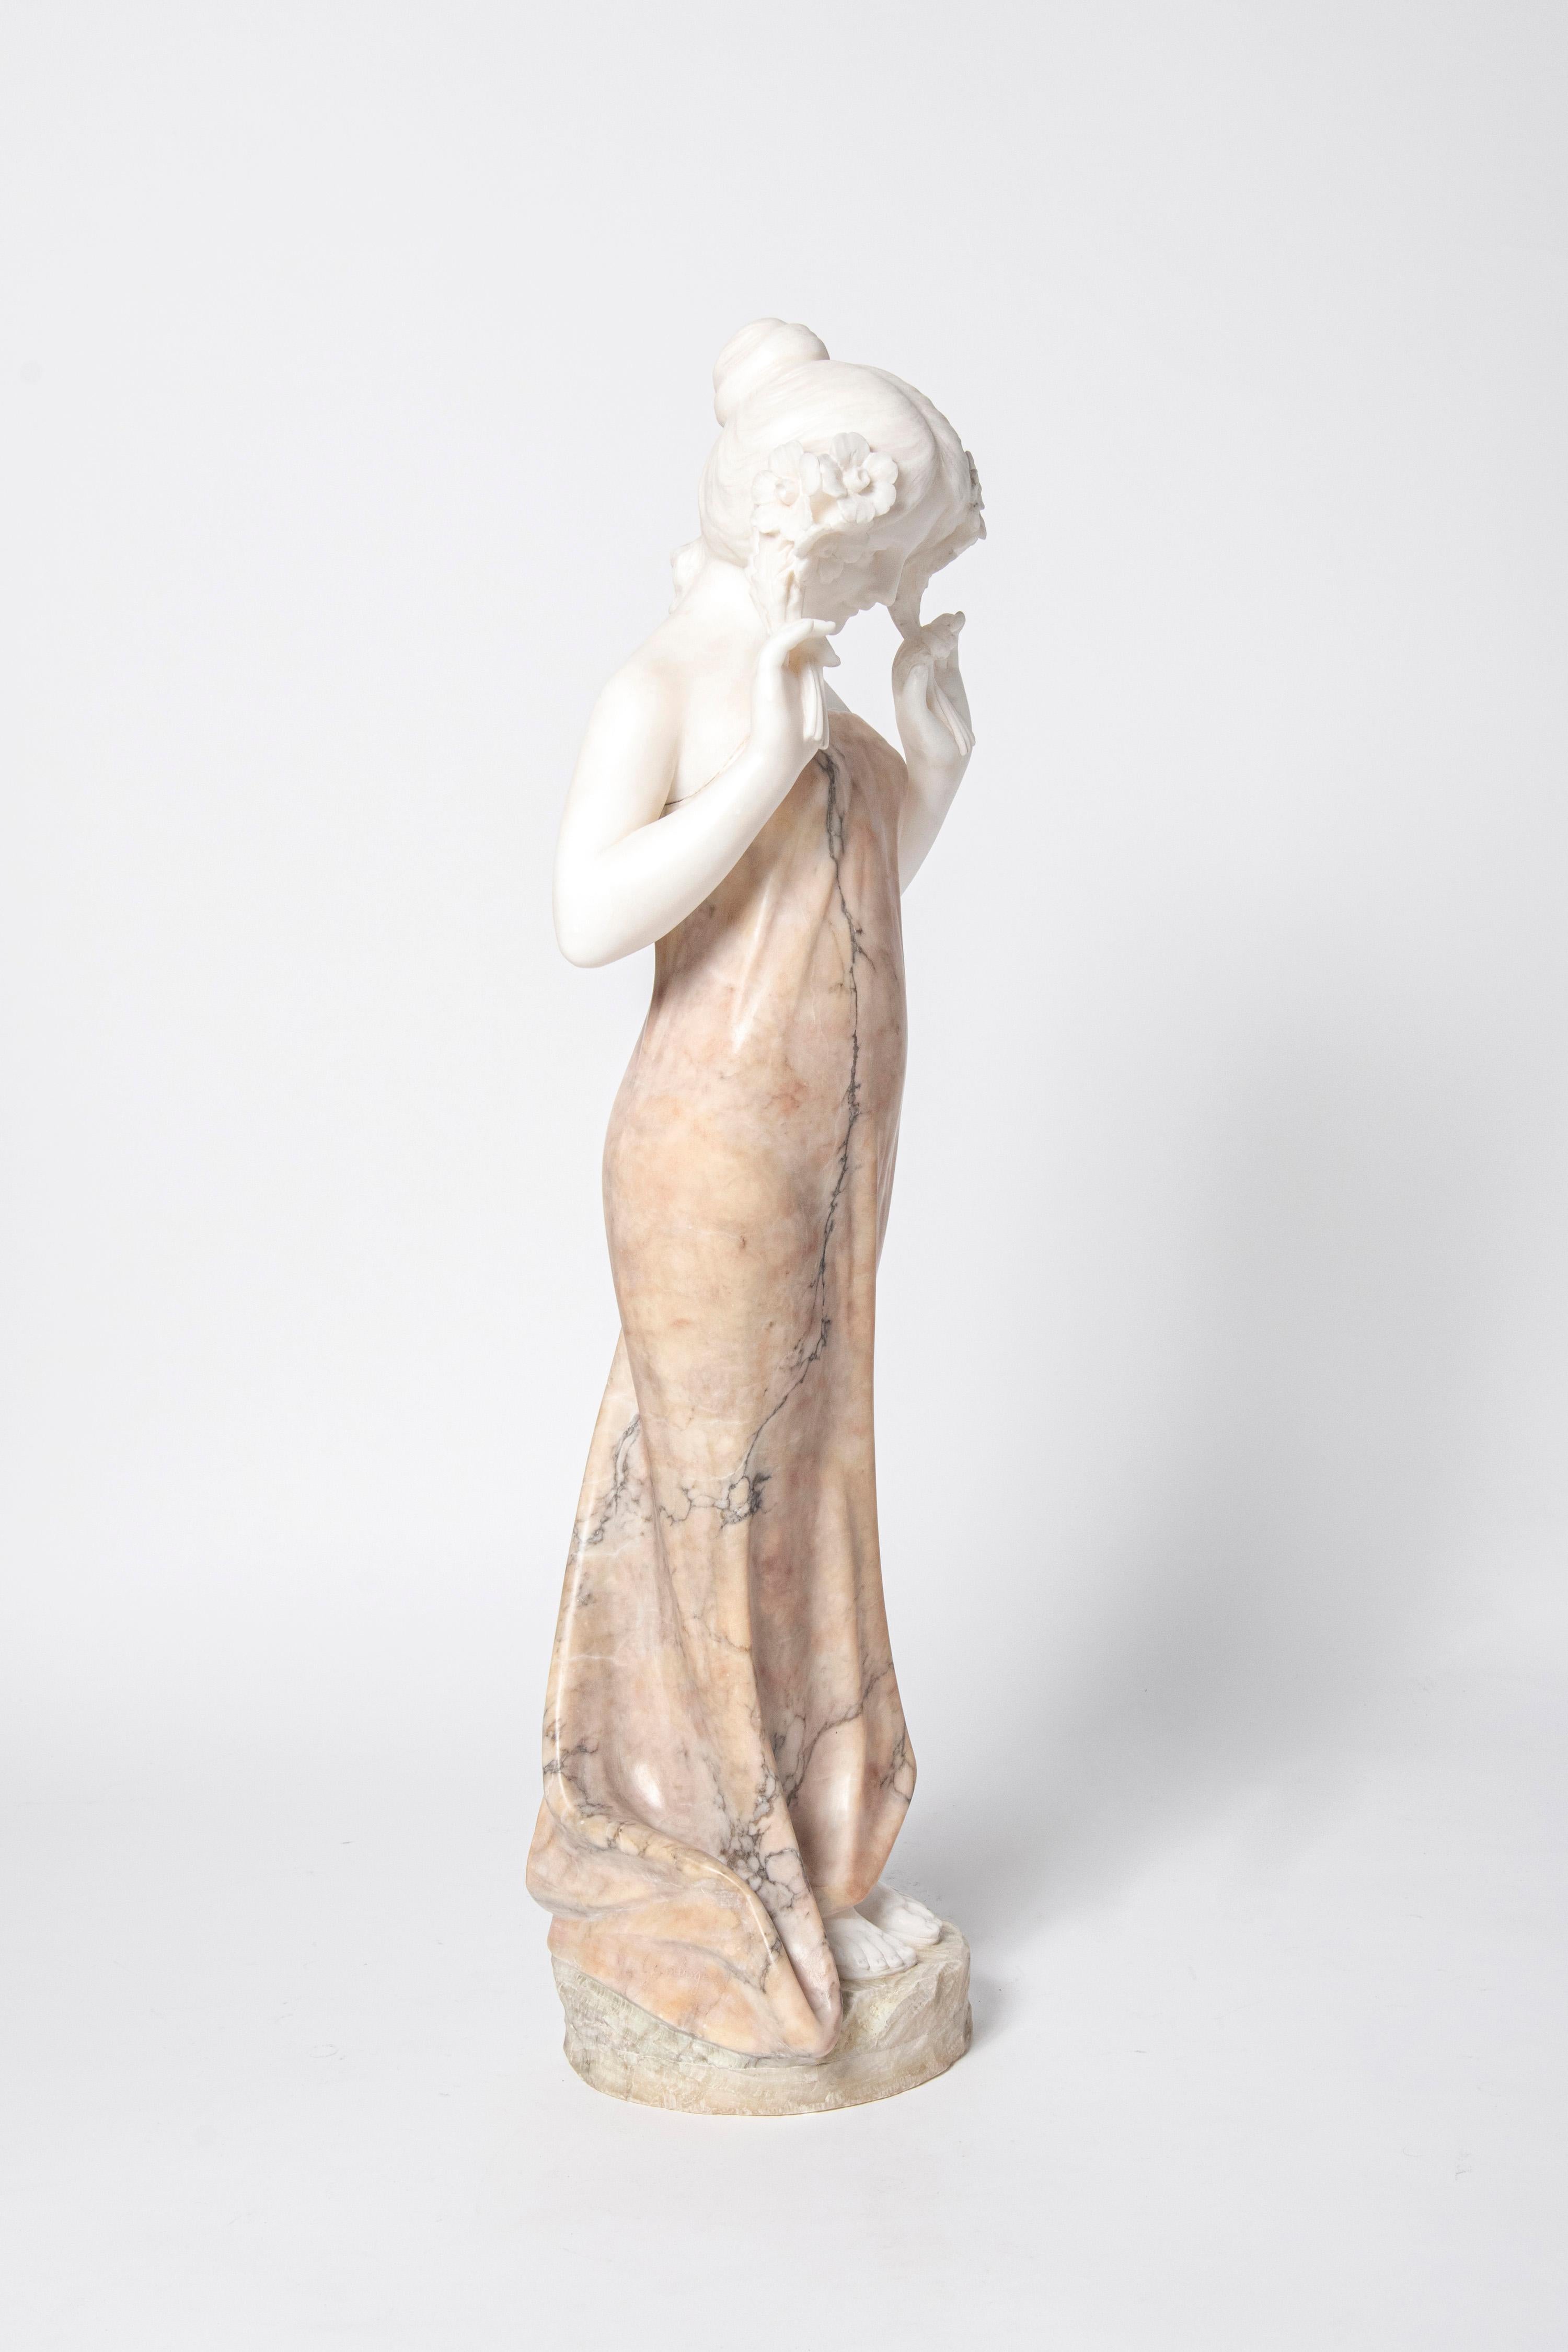 Alabaster-Skulptur signiert G. Gambogi. Italien, Anfang des 20. Jahrhunderts.
Giuseppe Gambogi (1862 - 1938).